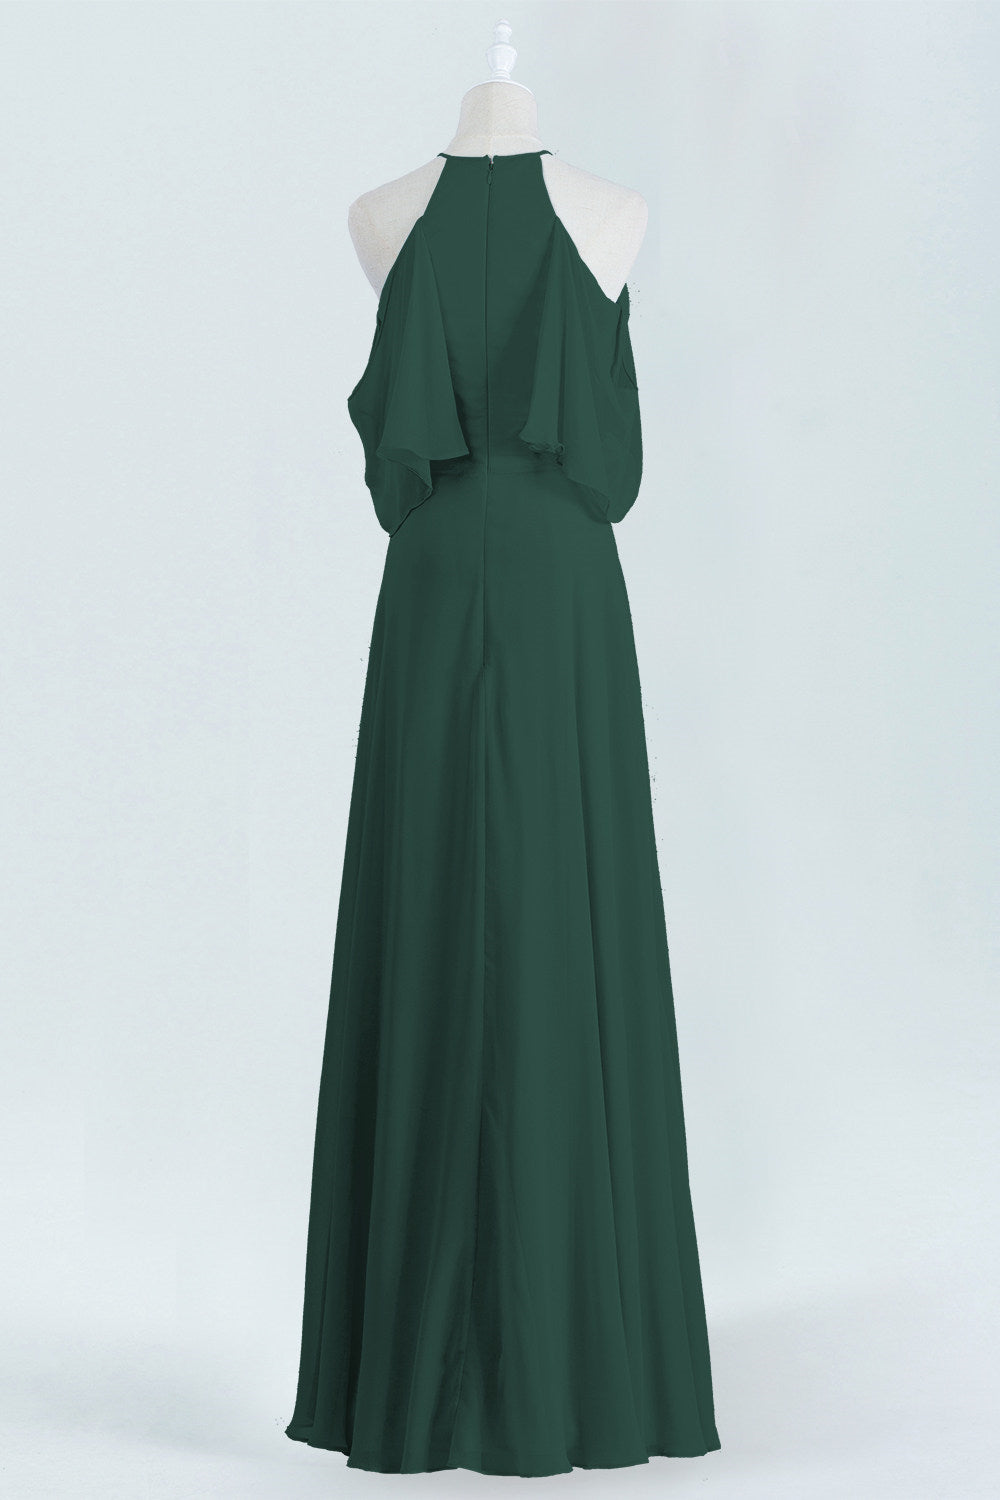 Hunter Green Chiffon A-line Long Bridesmaid Dress with Cold Sleeves